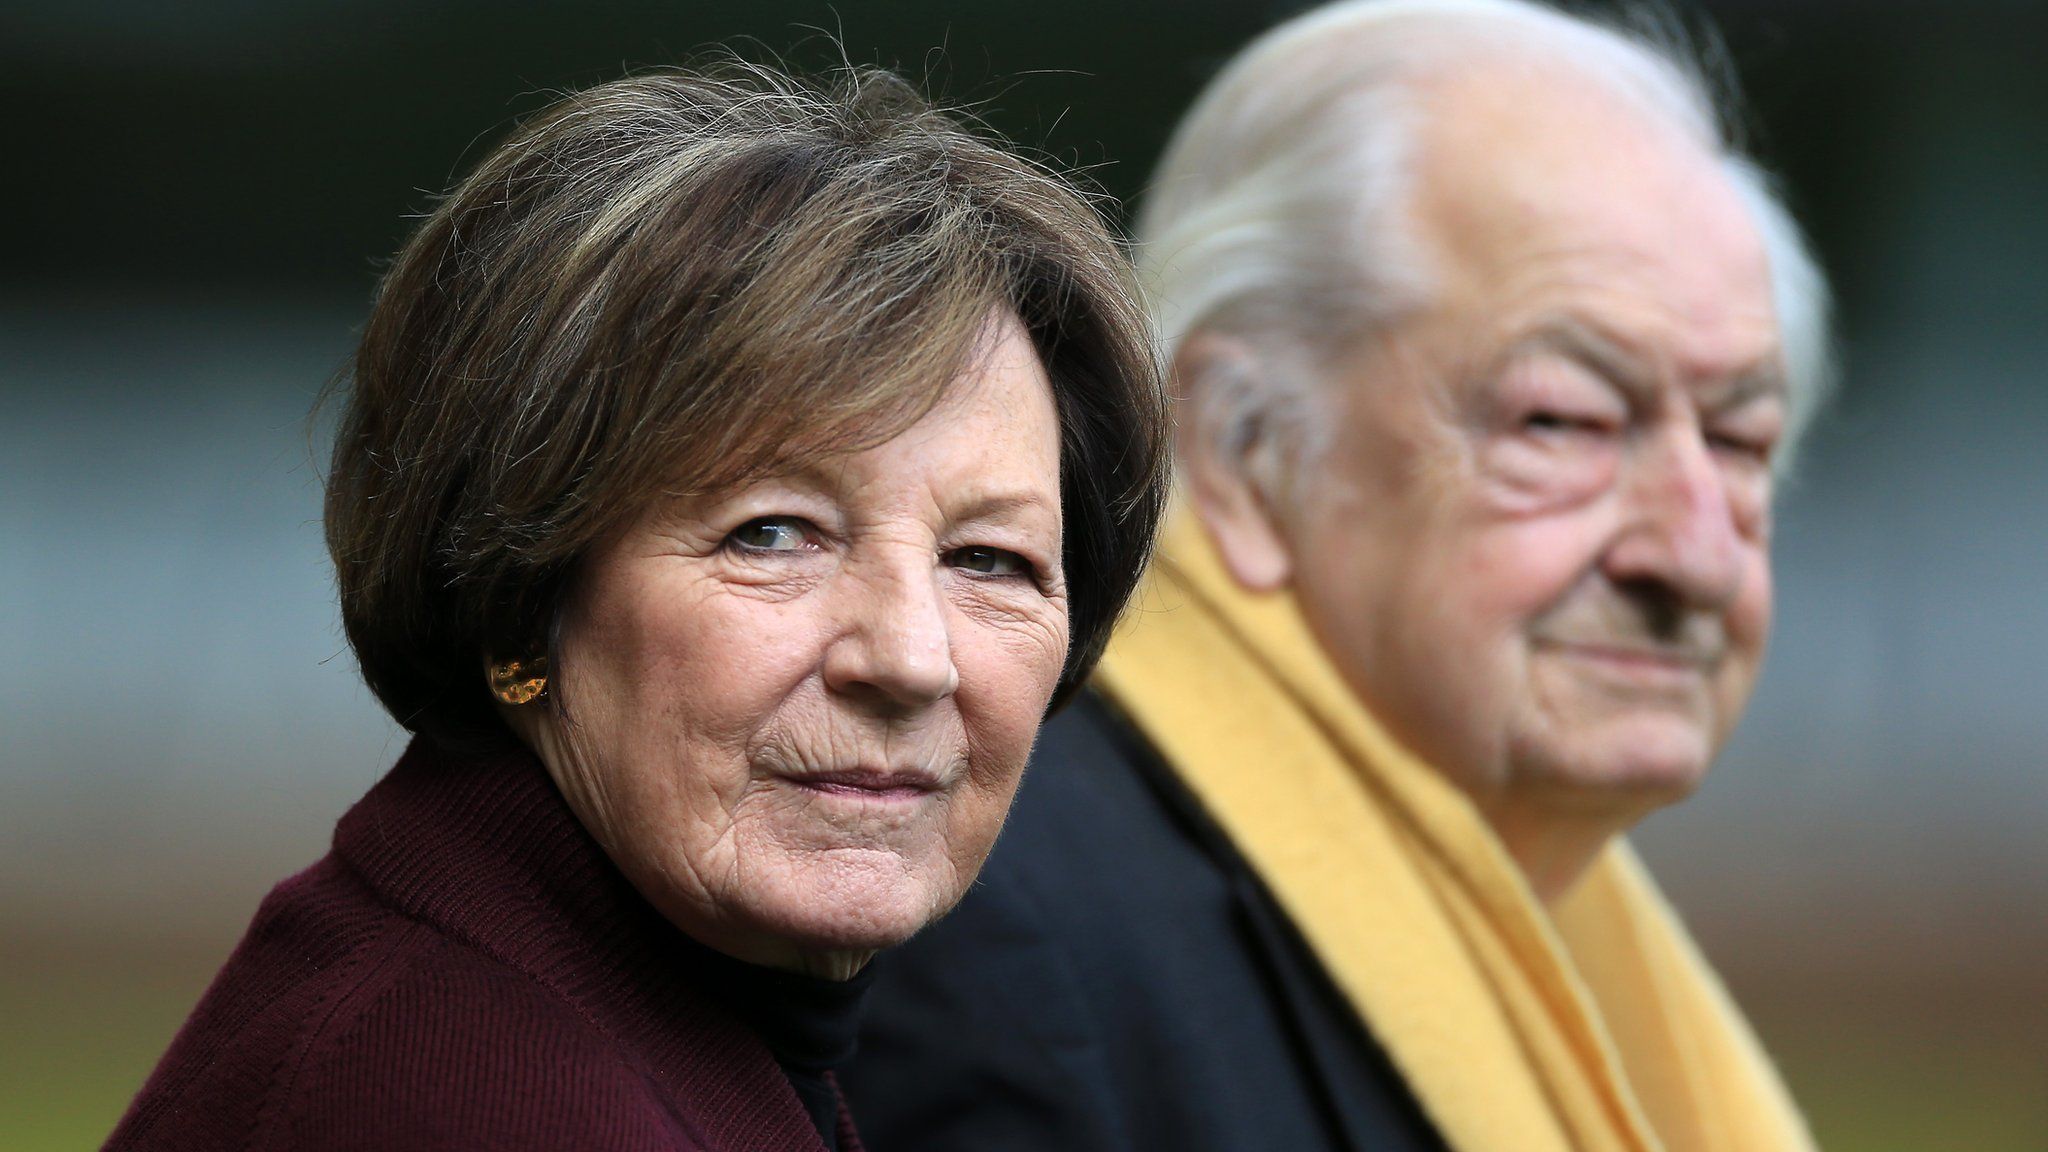 Delia Smith and Michael Wynn Jones joined the Norwich board in 1996